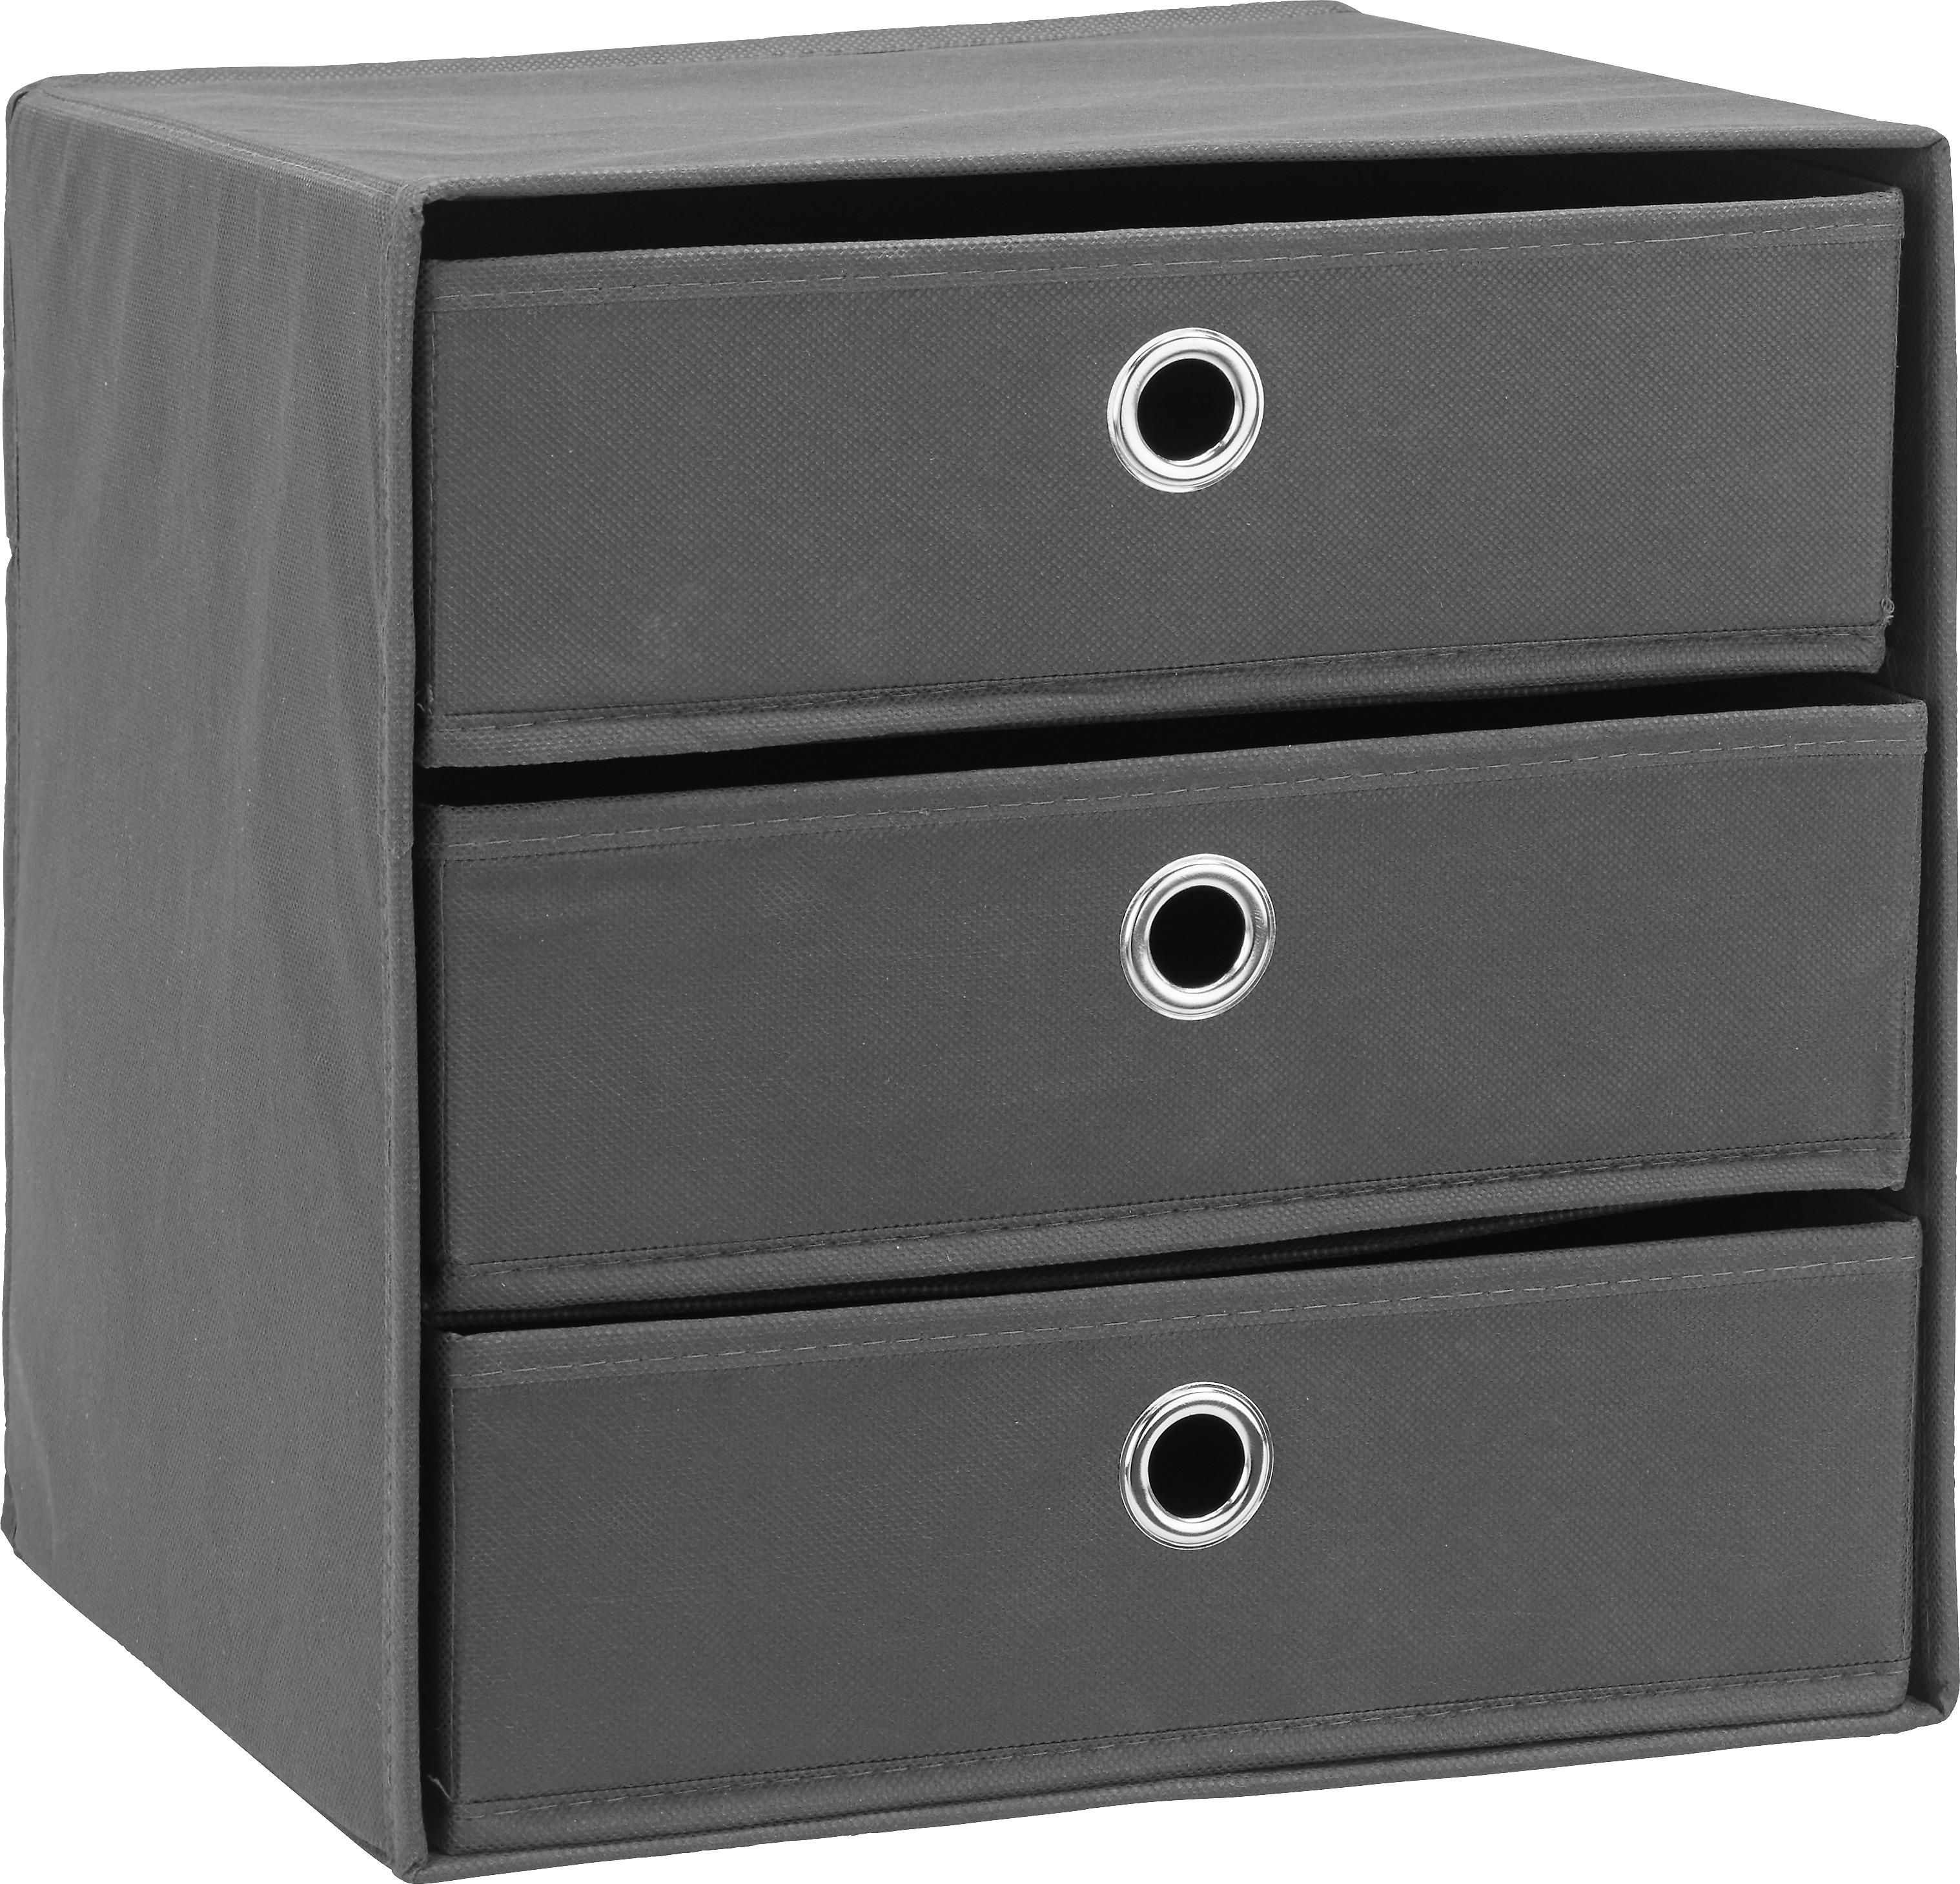 Schubladenbox Mona ca. 32x31,5cm - Anthrazit, MODERN, Karton/Textil (32/31,5/32cm) - Modern Living